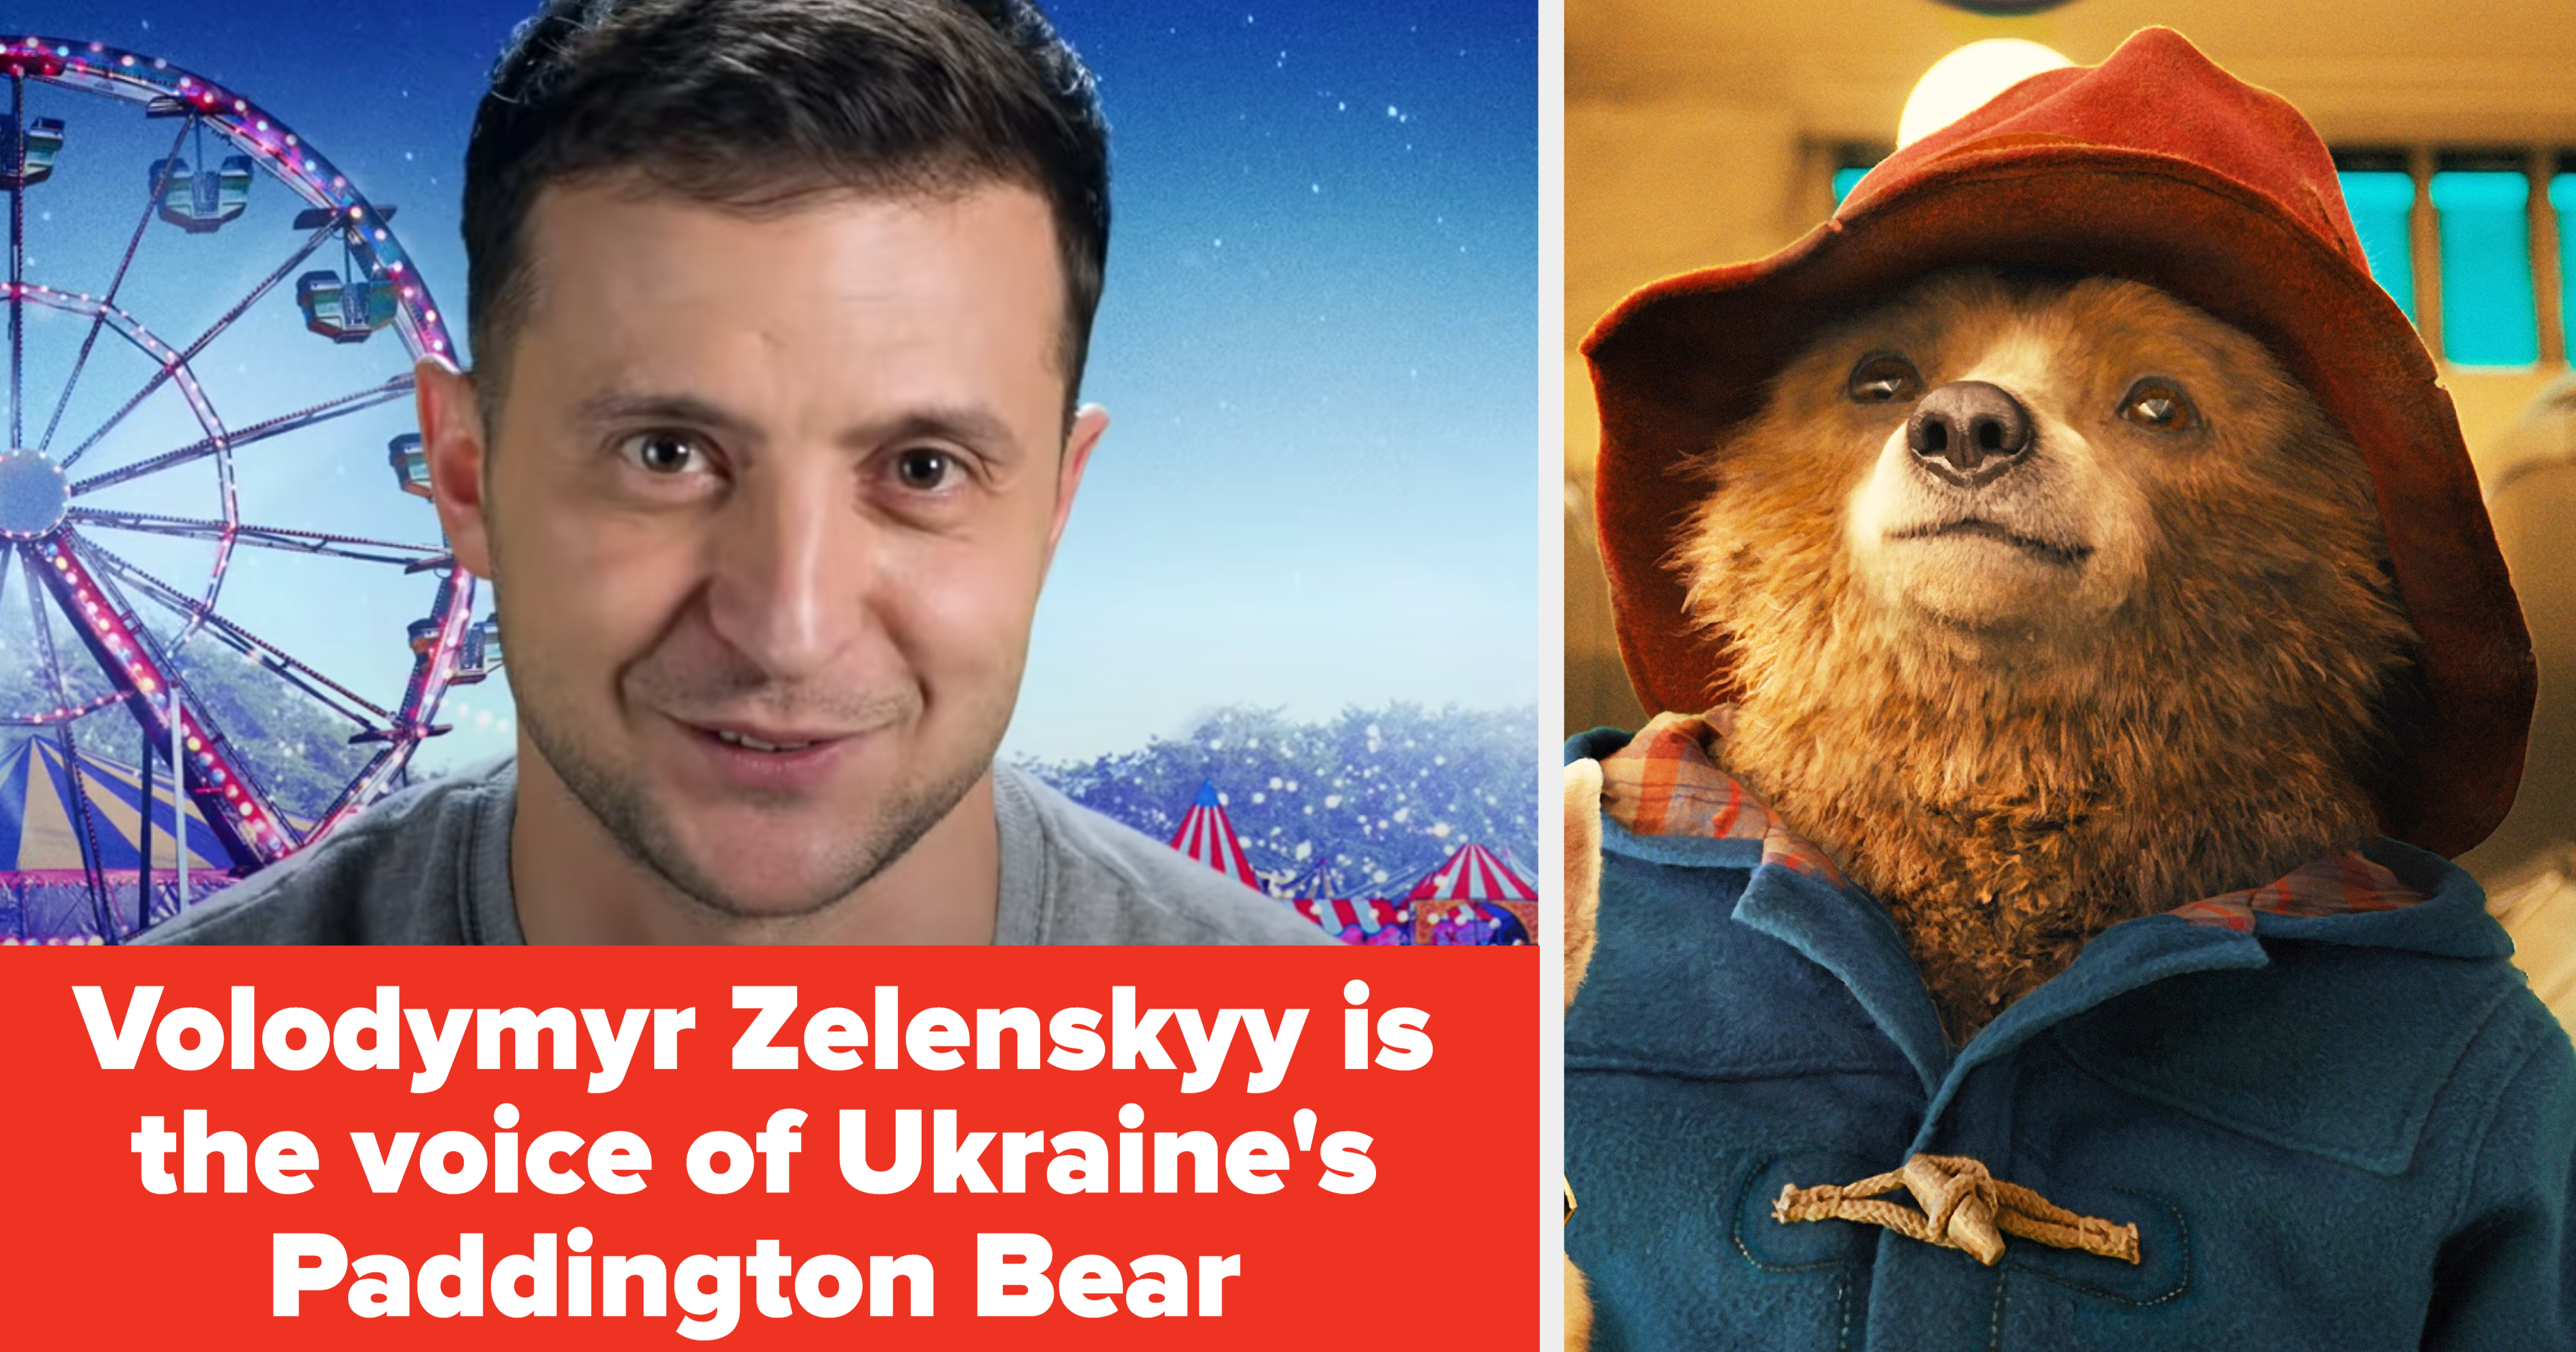 Who is the voice of Paddington Bear?